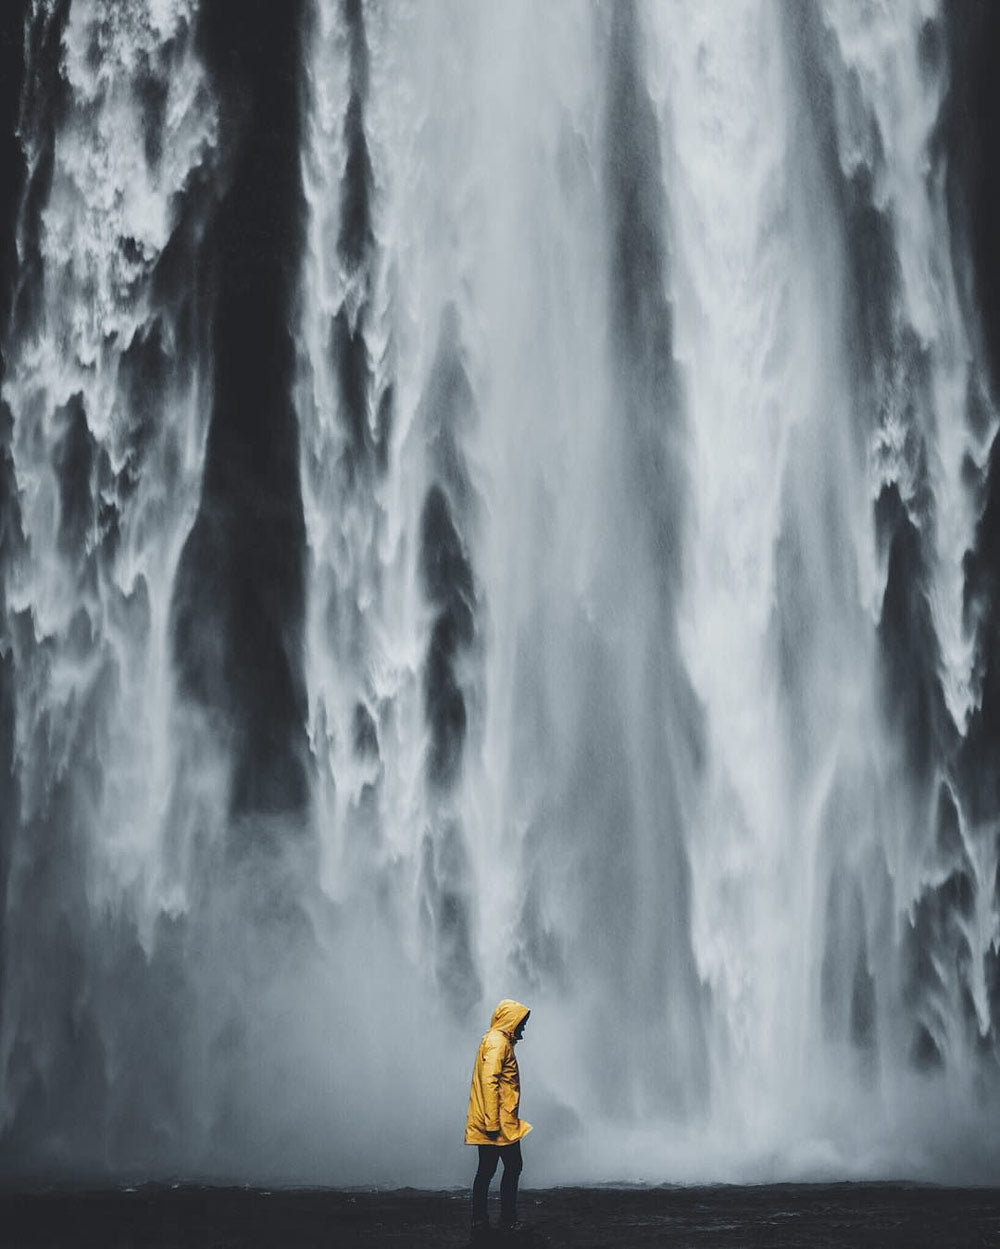 Pantone COTY Illuminating Yellow Raincoat + Ultimate Grey Waterfall